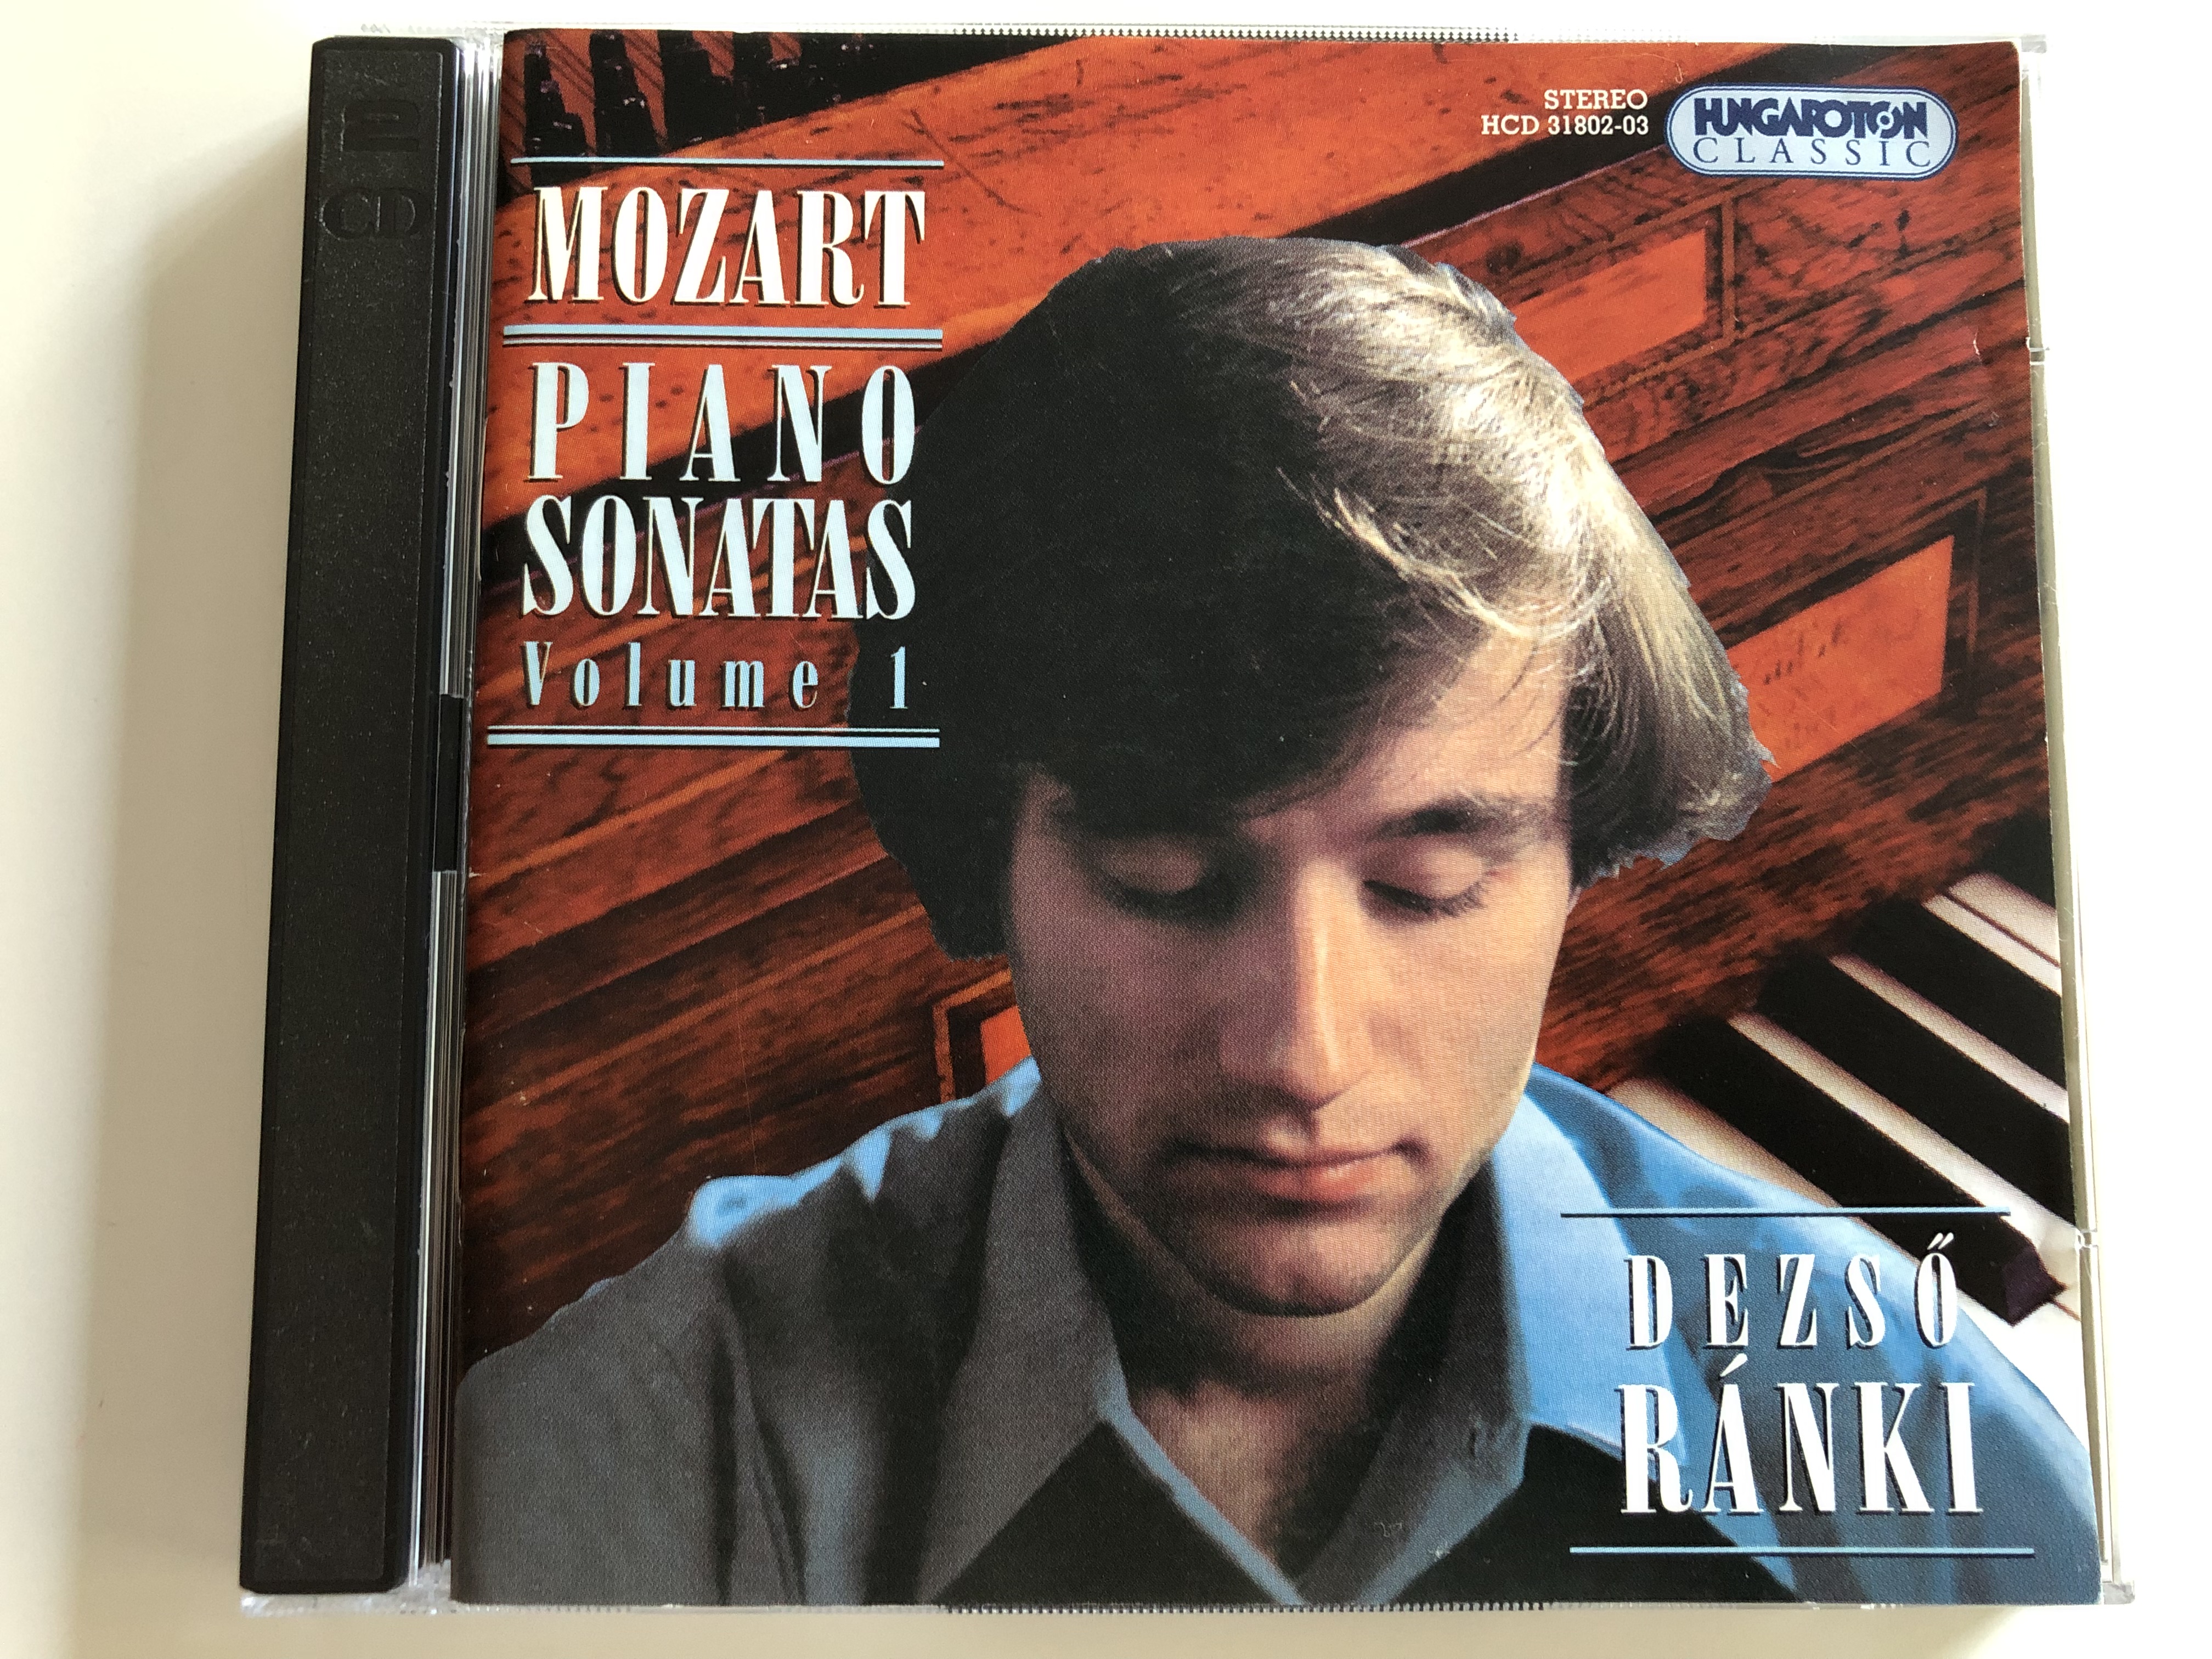 mozart-piano-sonatas-volume-1-dezs-r-nki-piano-hungaroton-classic-audio-cd-1998-hcd-31802-03-2-cd-1-.jpg